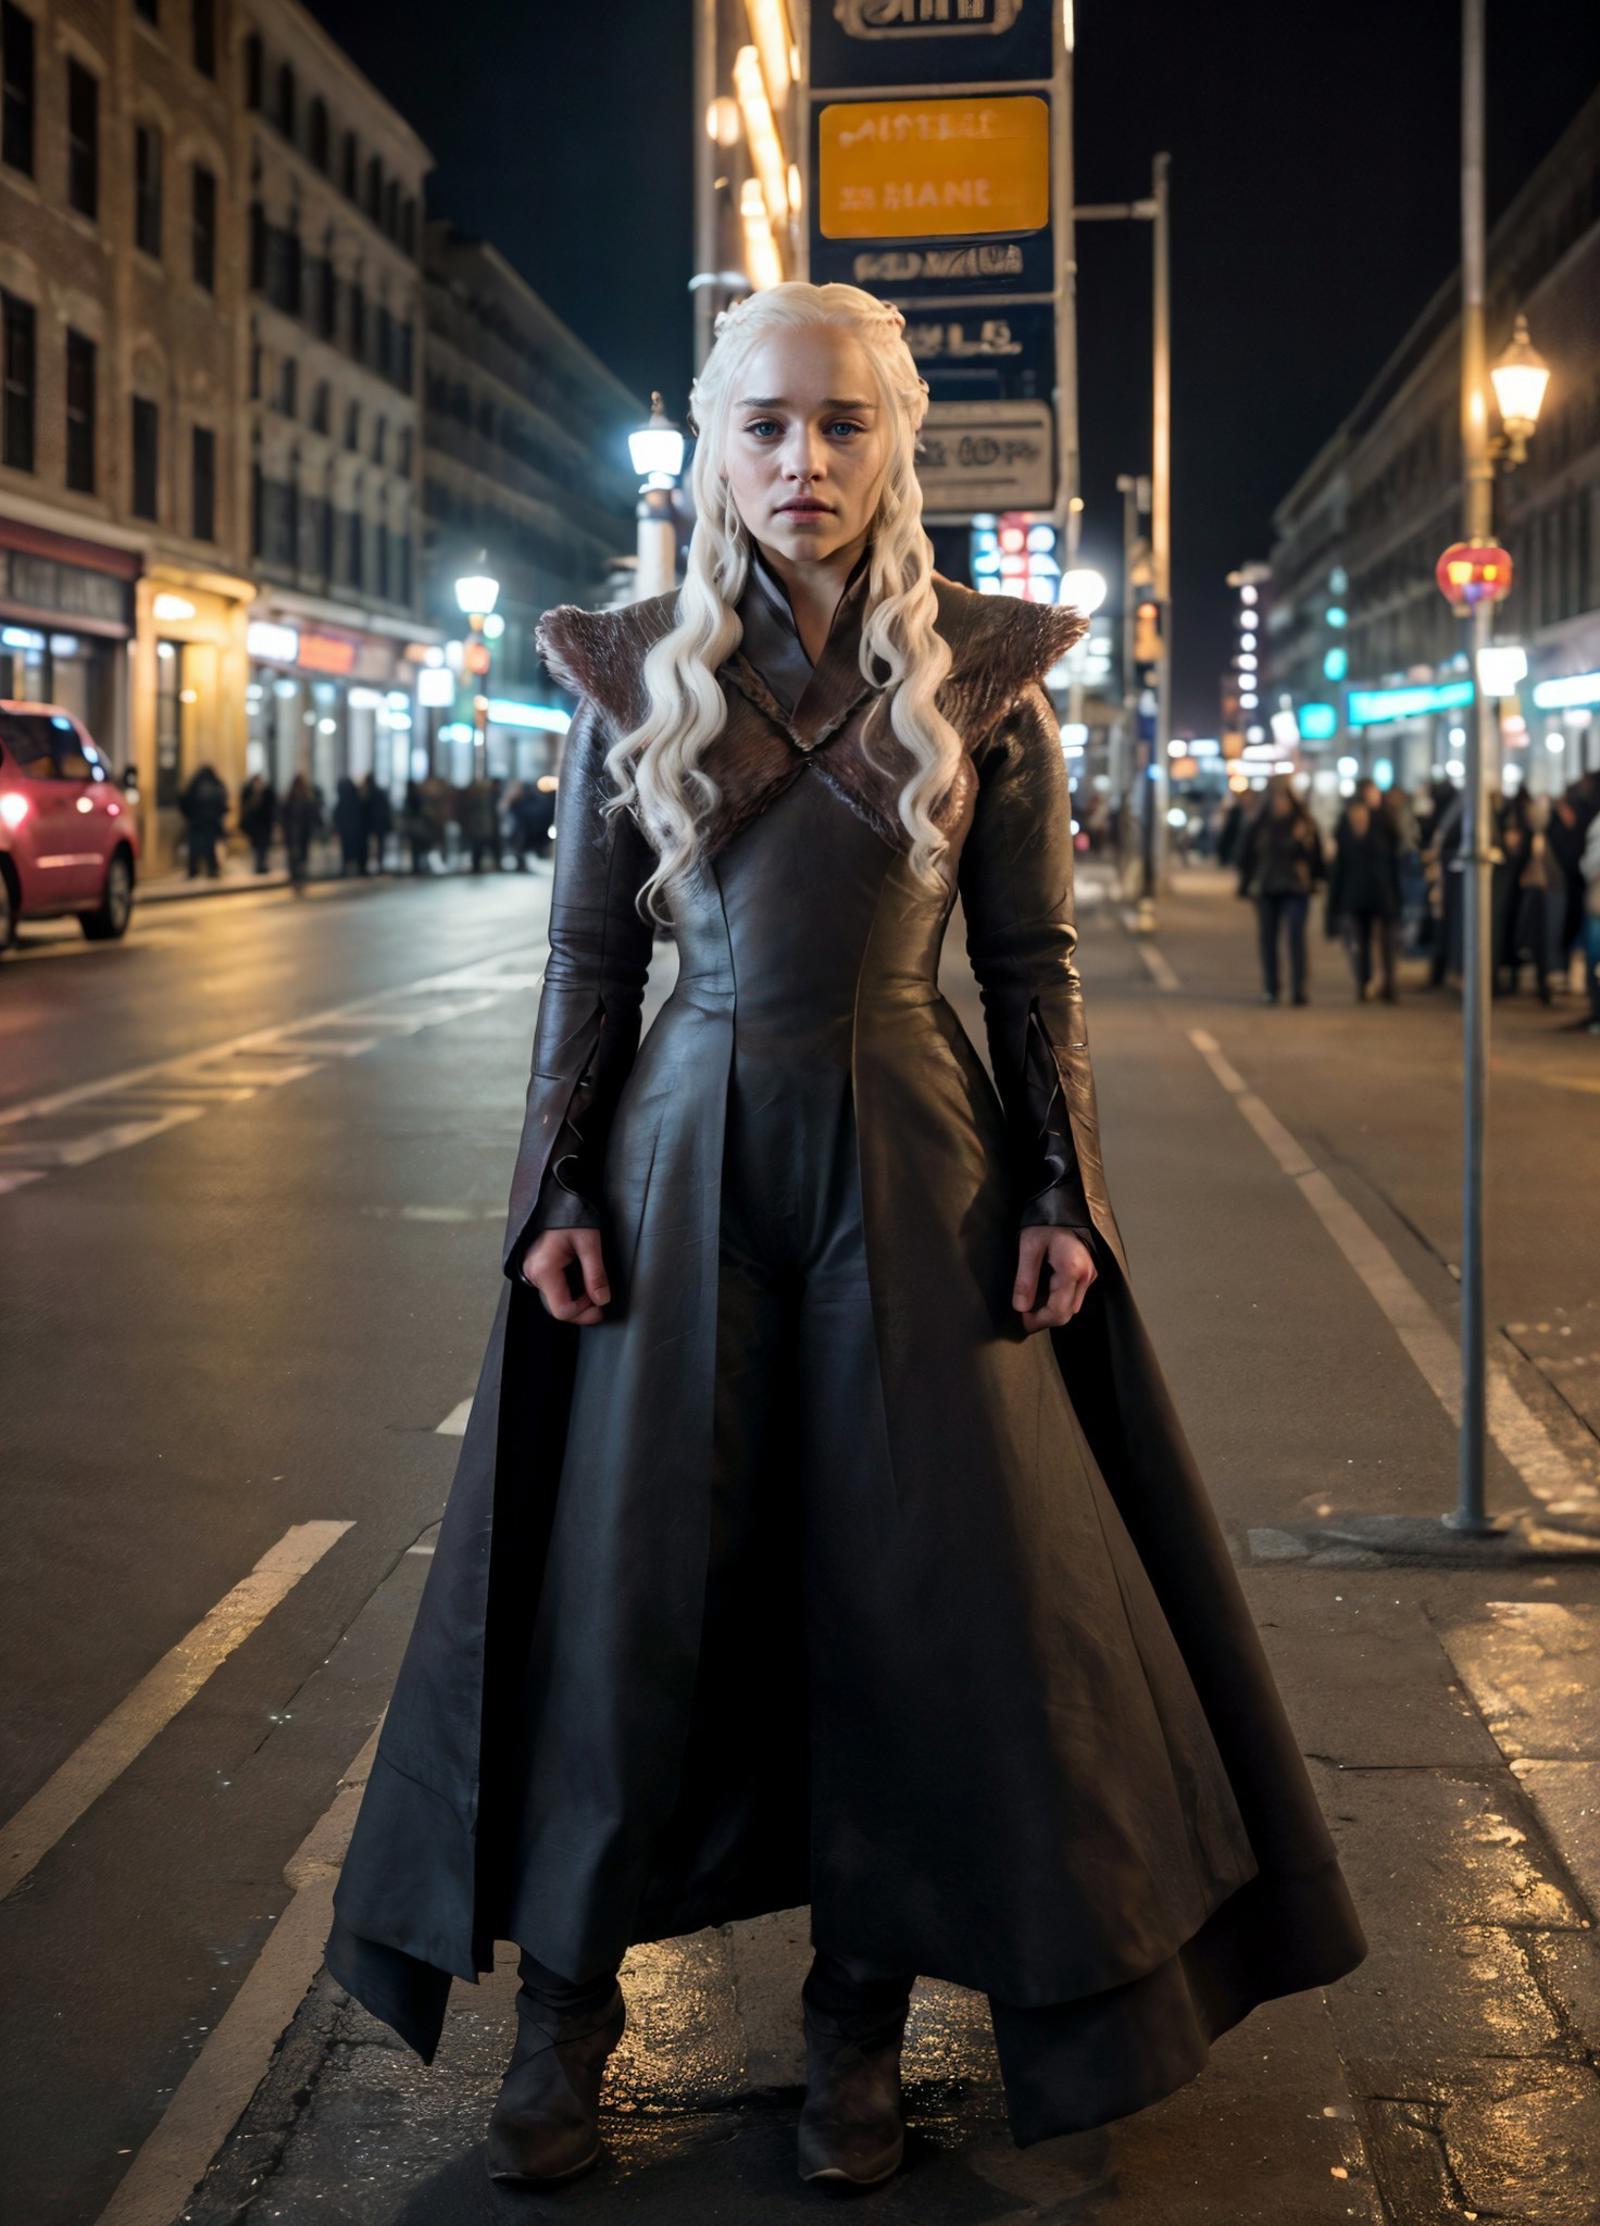 Emilia Clarke image by damocles_aaa